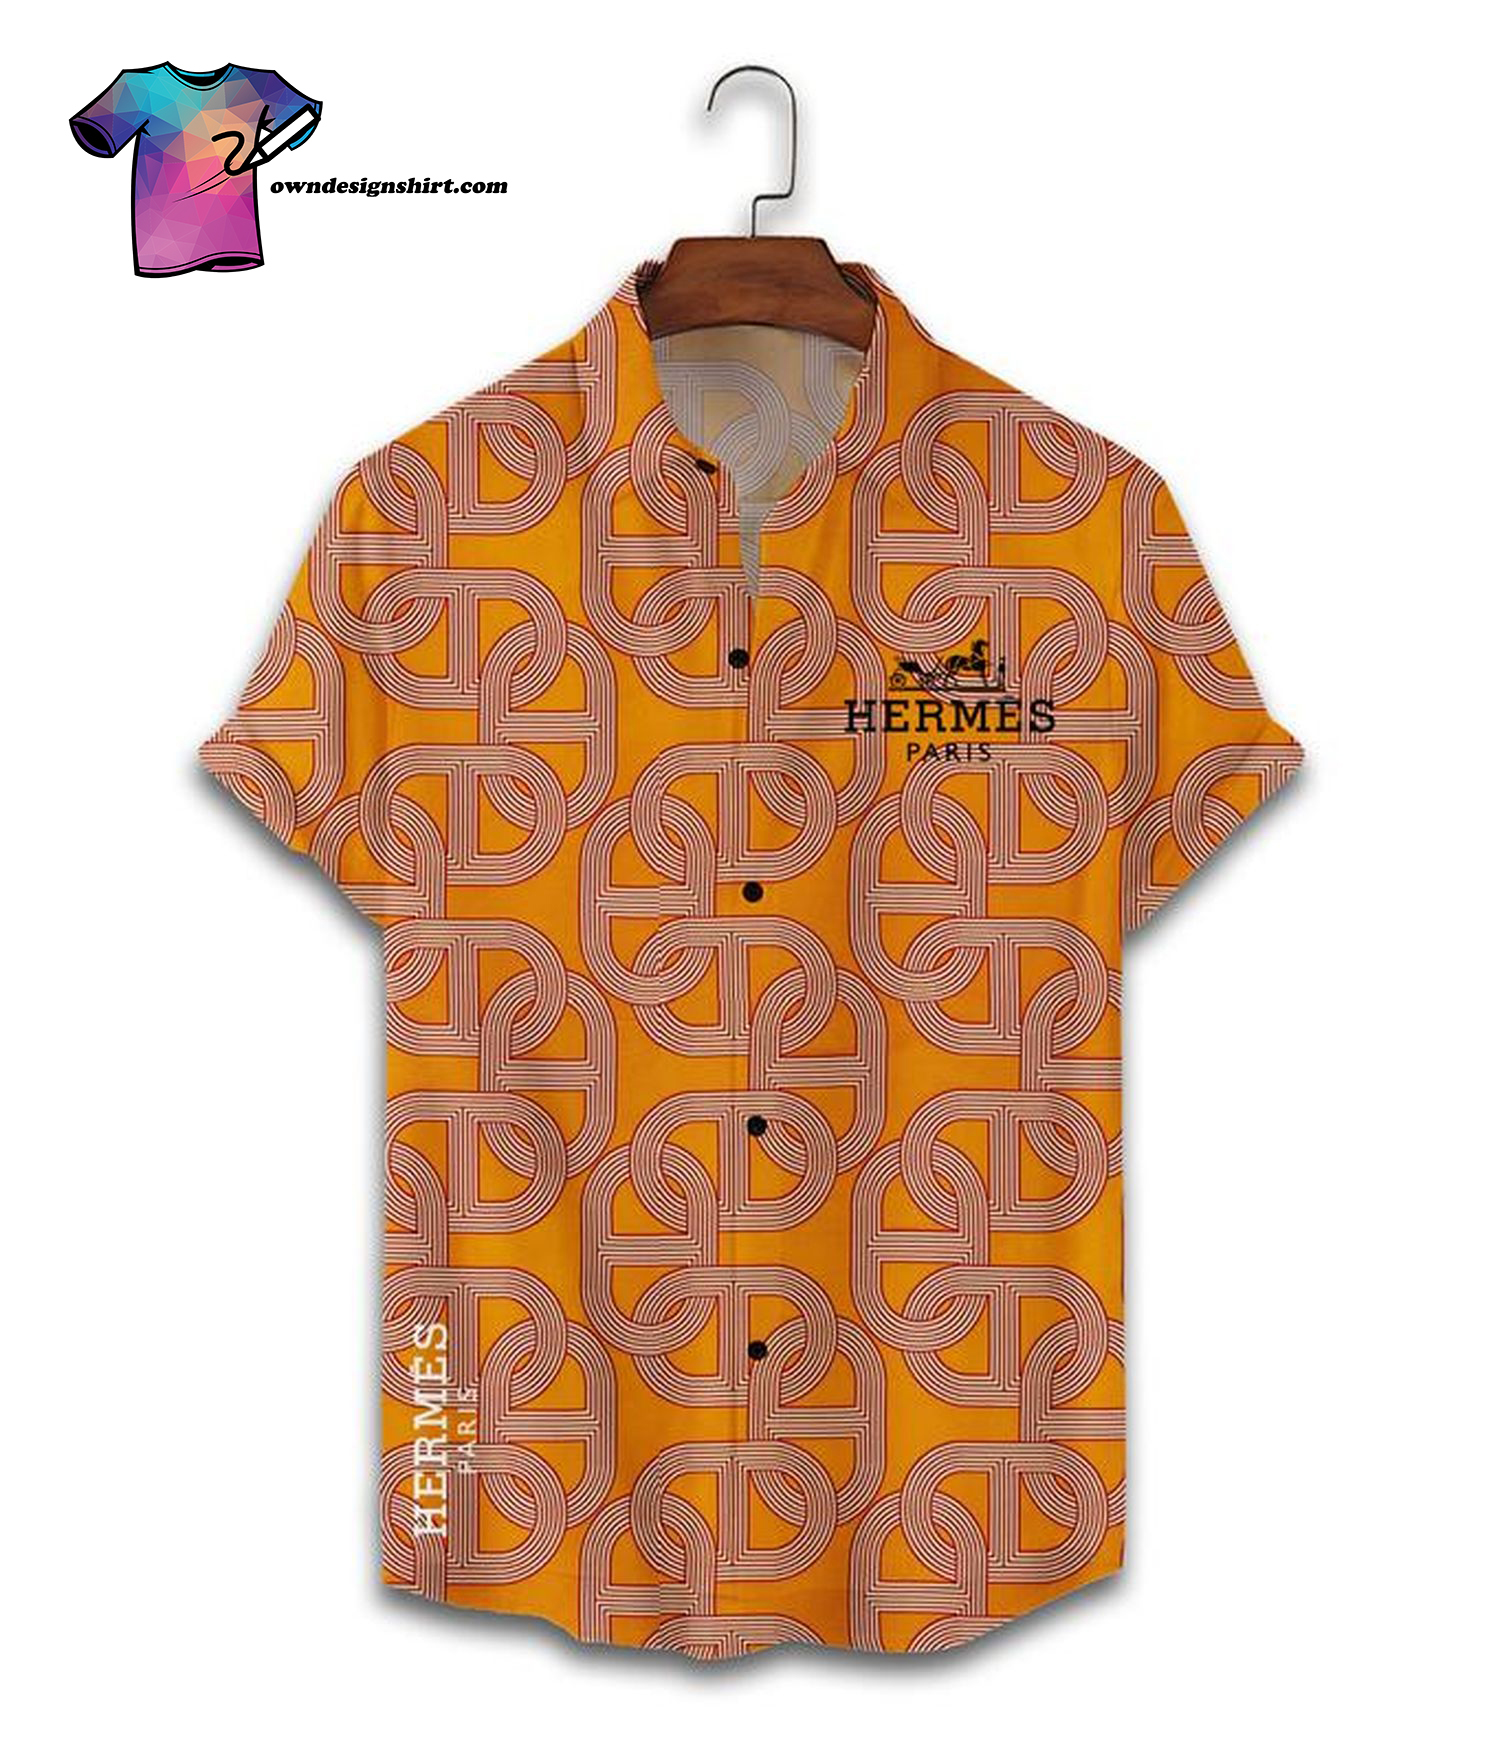 The best selling] Hermes Monogram Full Print Hawaiian Shirt Beach